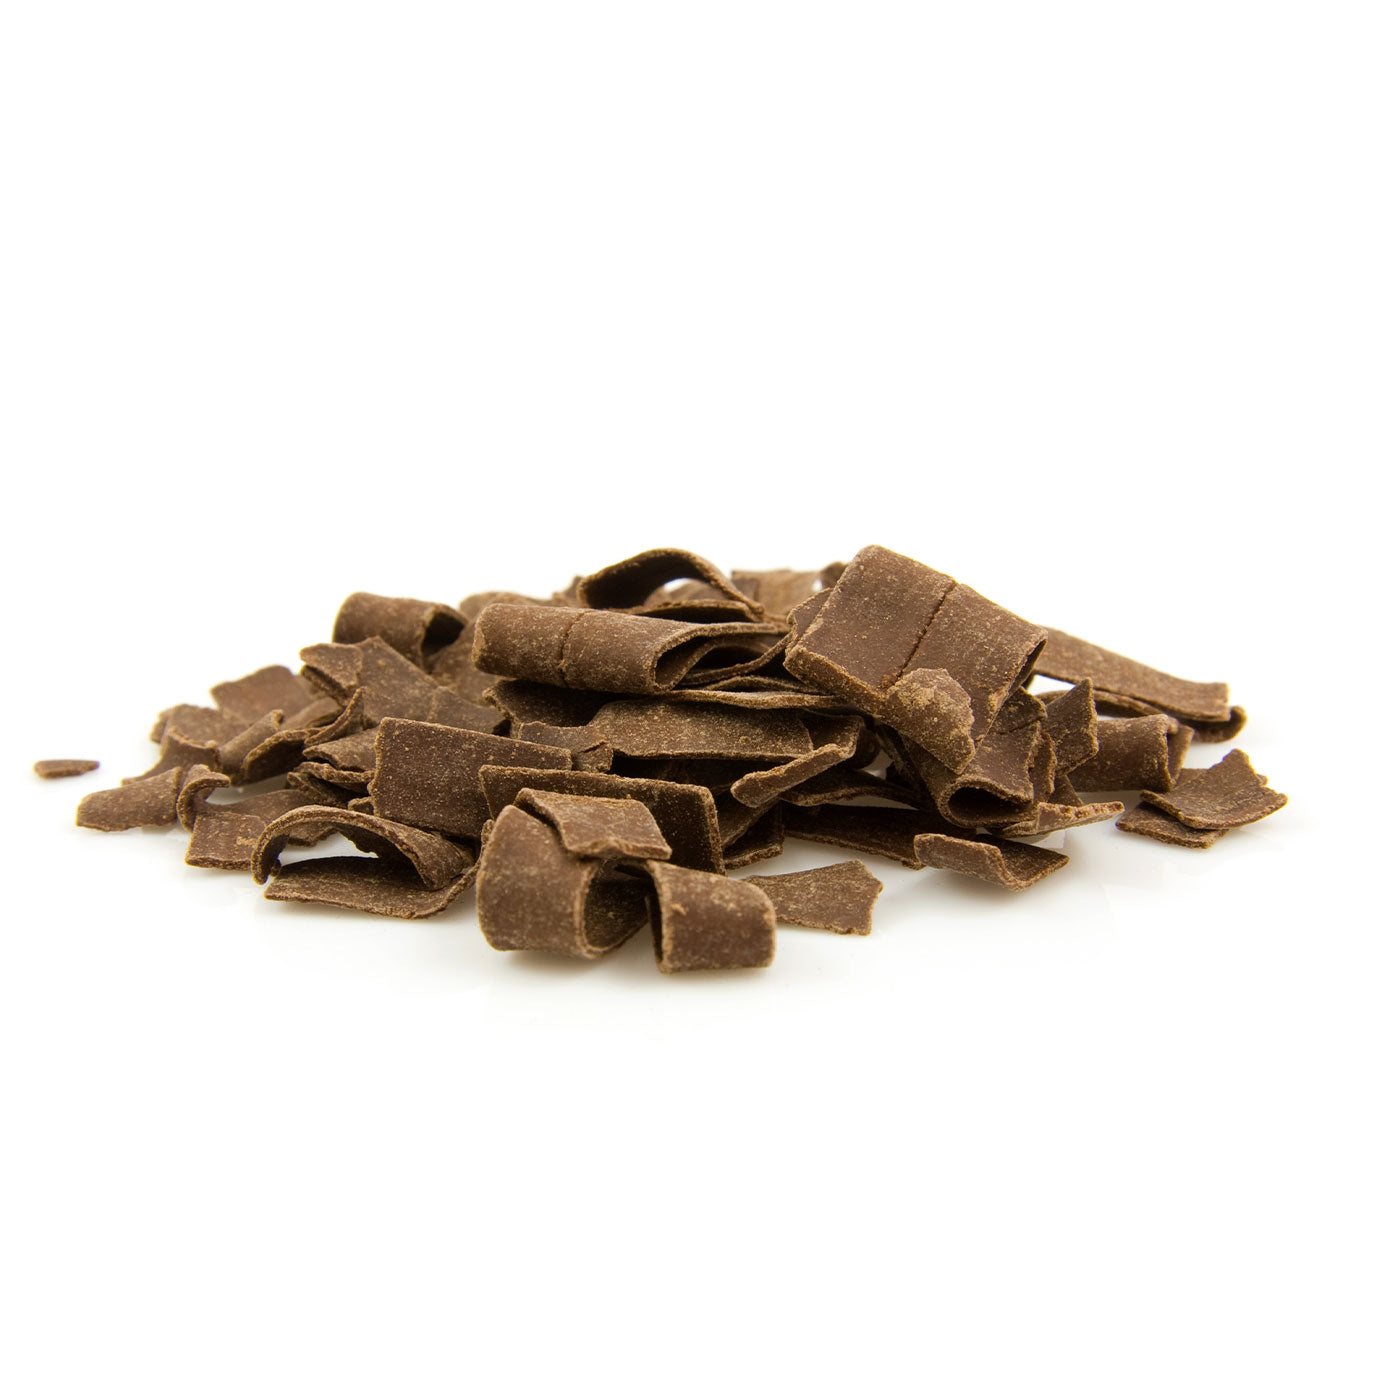 De Ruijter Dark Chocolate Flakes 300g - Dutch Food Company - Rich Taste of Netherlands. - Image 3